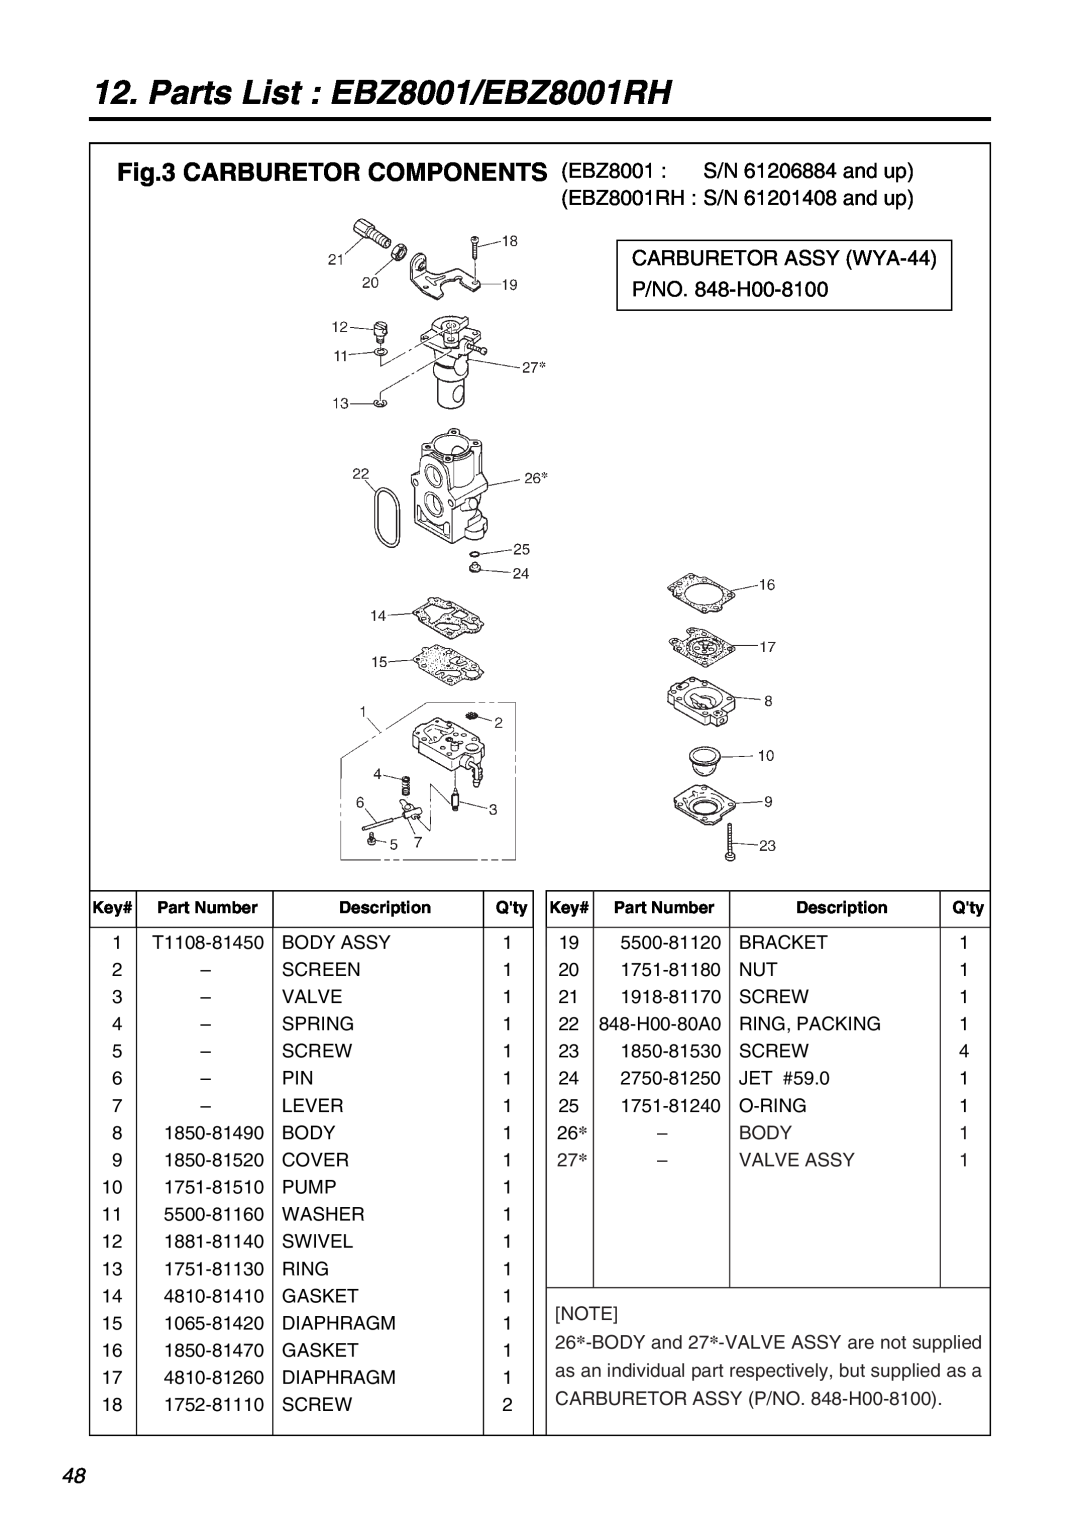 RedMax manual CARBURETOR ASSY WYA-44 P/NO. 848-H00-8100, Parts List EBZ8001/EBZ8001RH 